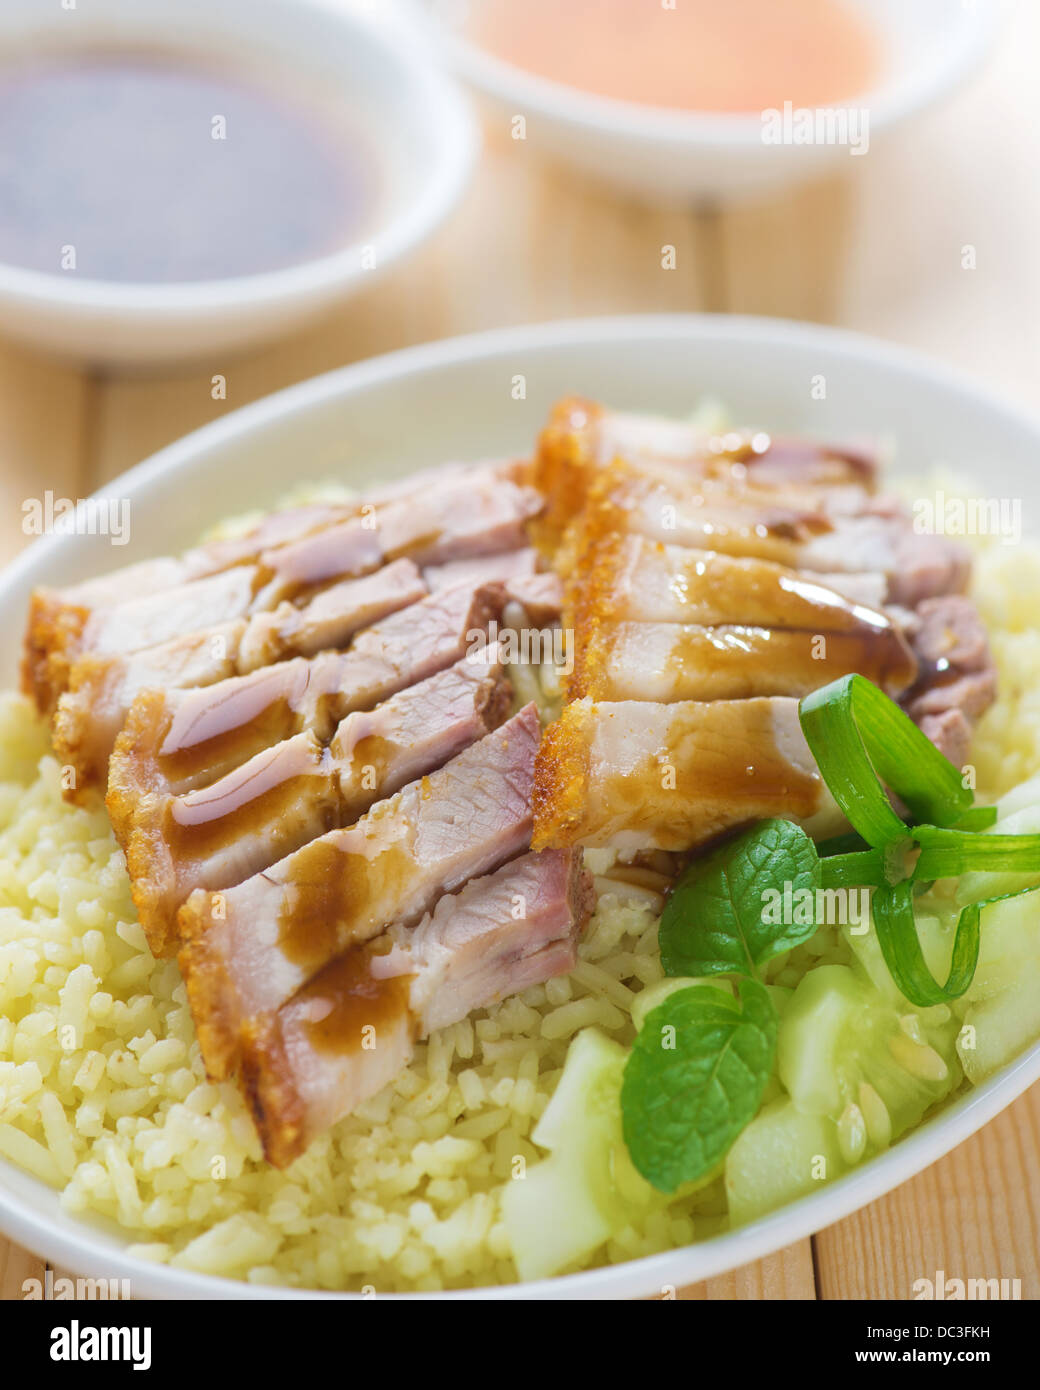 Siu Yuk or sliced Chinese boneless roast pork with crispy skin, serve with steamed rice. Singapore Chinese cuisine. Stock Photo